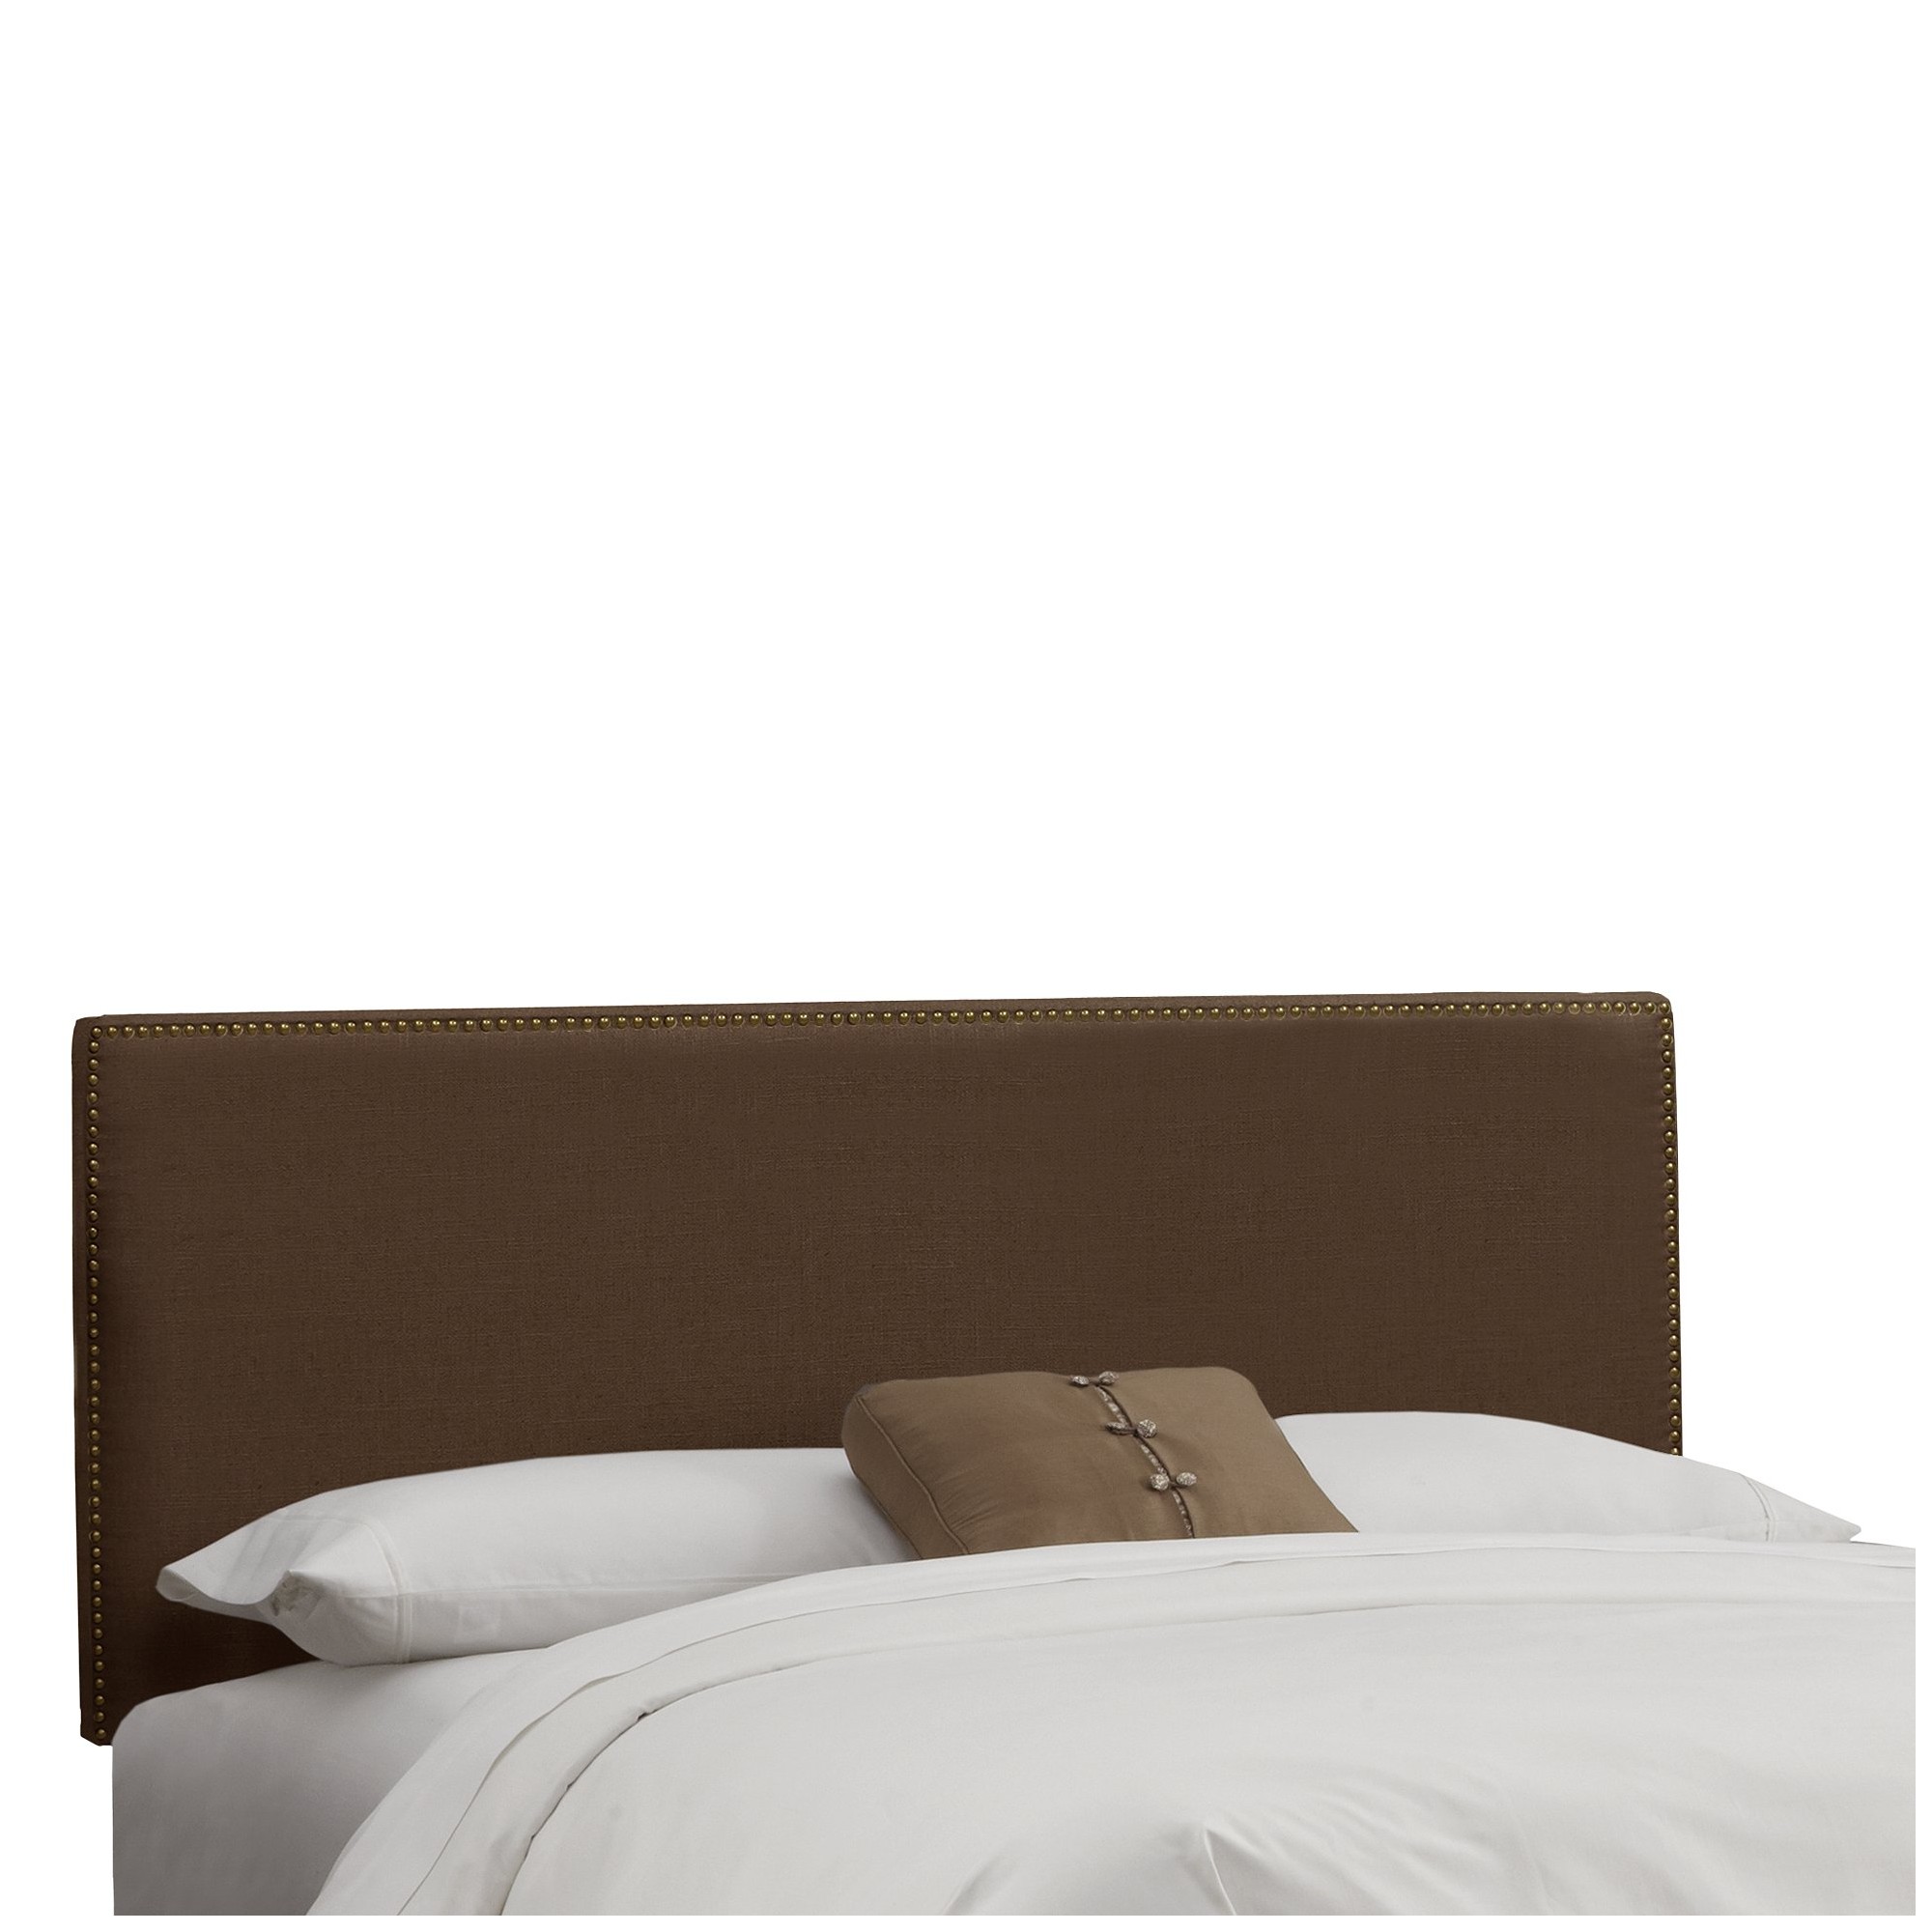 Queen Arcadia Nailbutton Headboard Linen Chocolate with Brass Nail Buttons - Skyline Furniture, Linen Brown